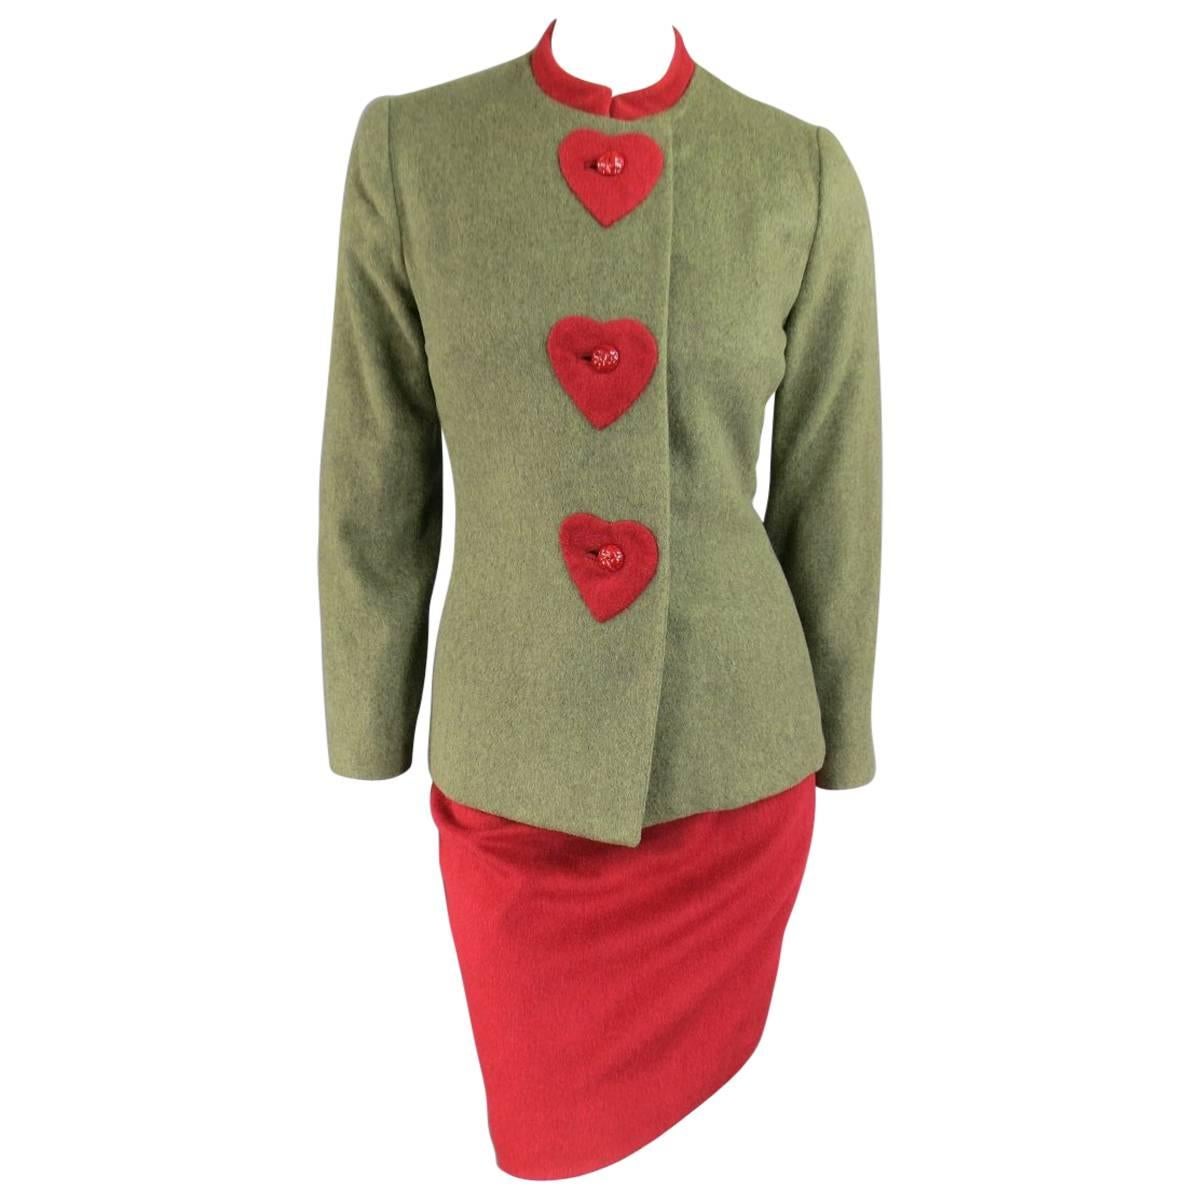 CAROLINA HERRERA Size 4 Green & Red Wool / Cashmere Heart Jacket Skirt Suit